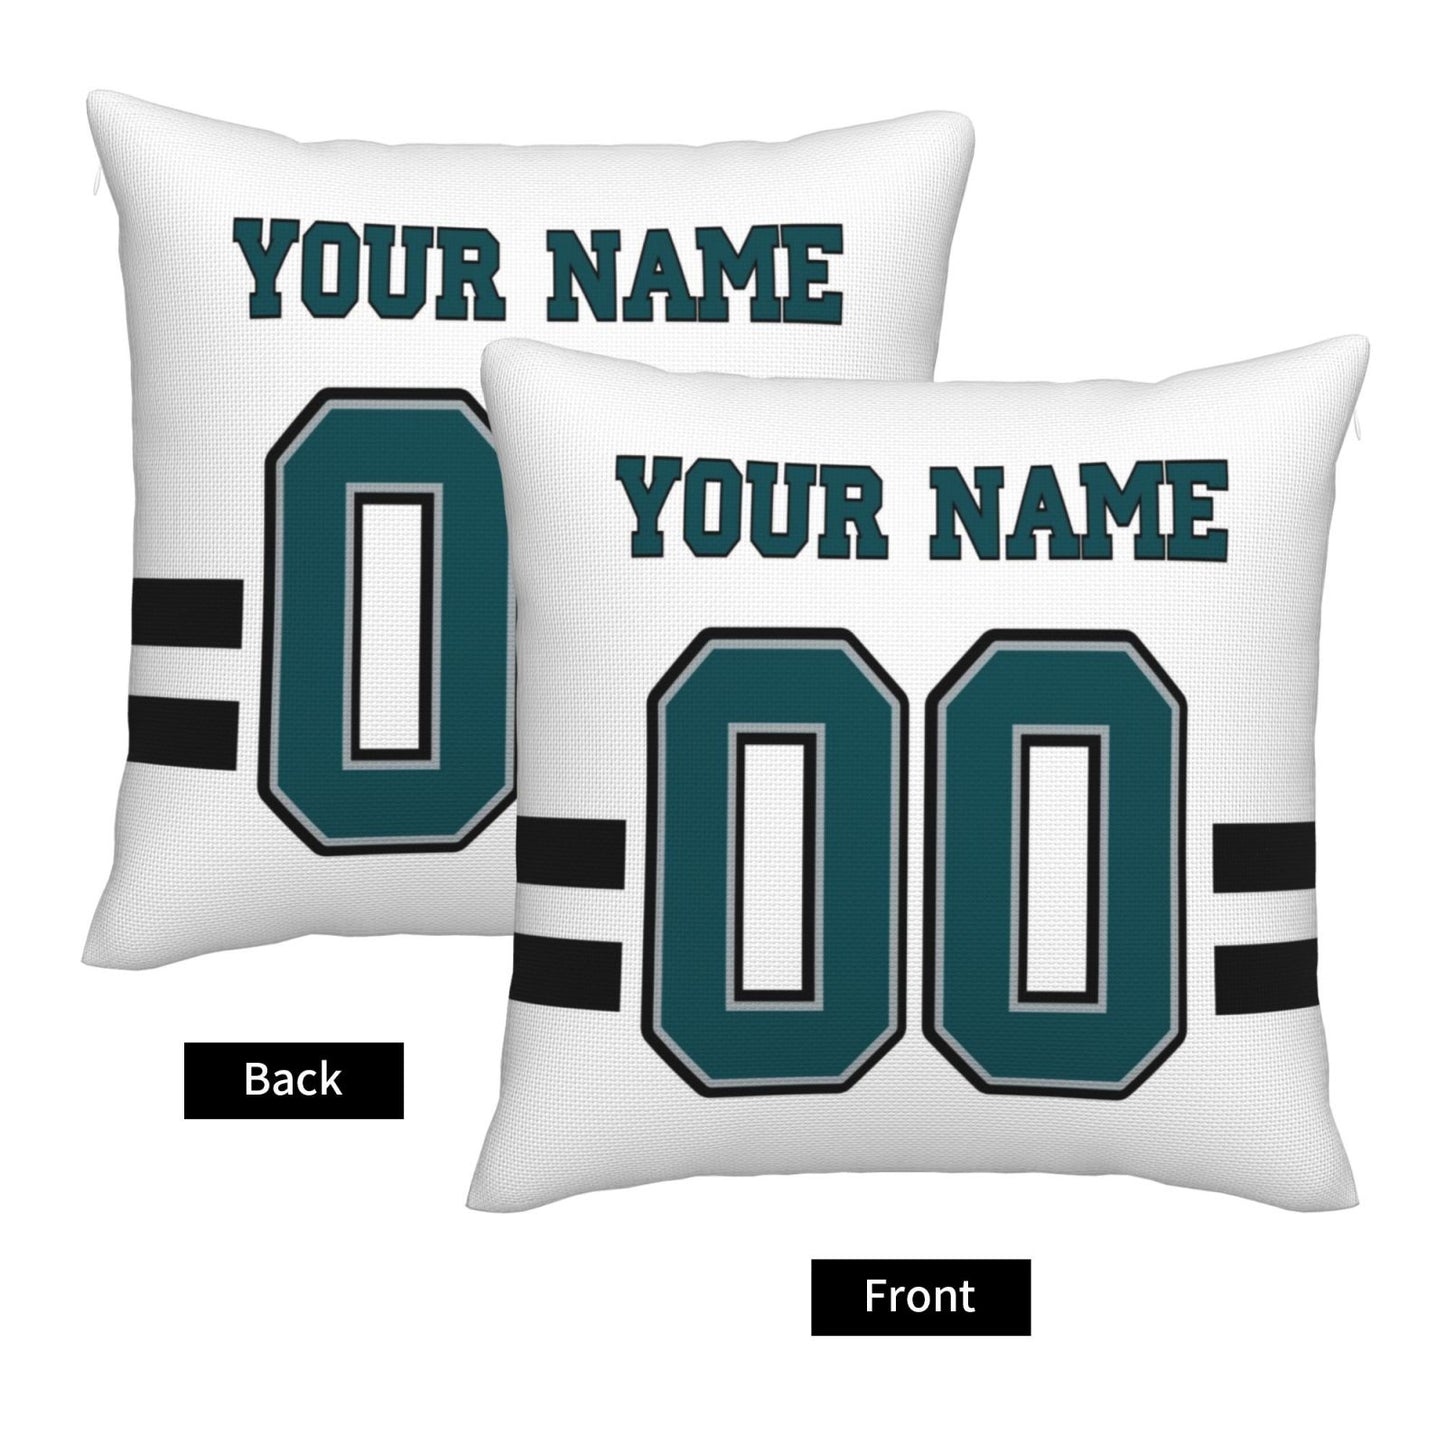 Custom White Philadelphia Eagles Decorative Throw Pillow Case - Print Personalized Football Team Fans Name & Number Birthday Gift